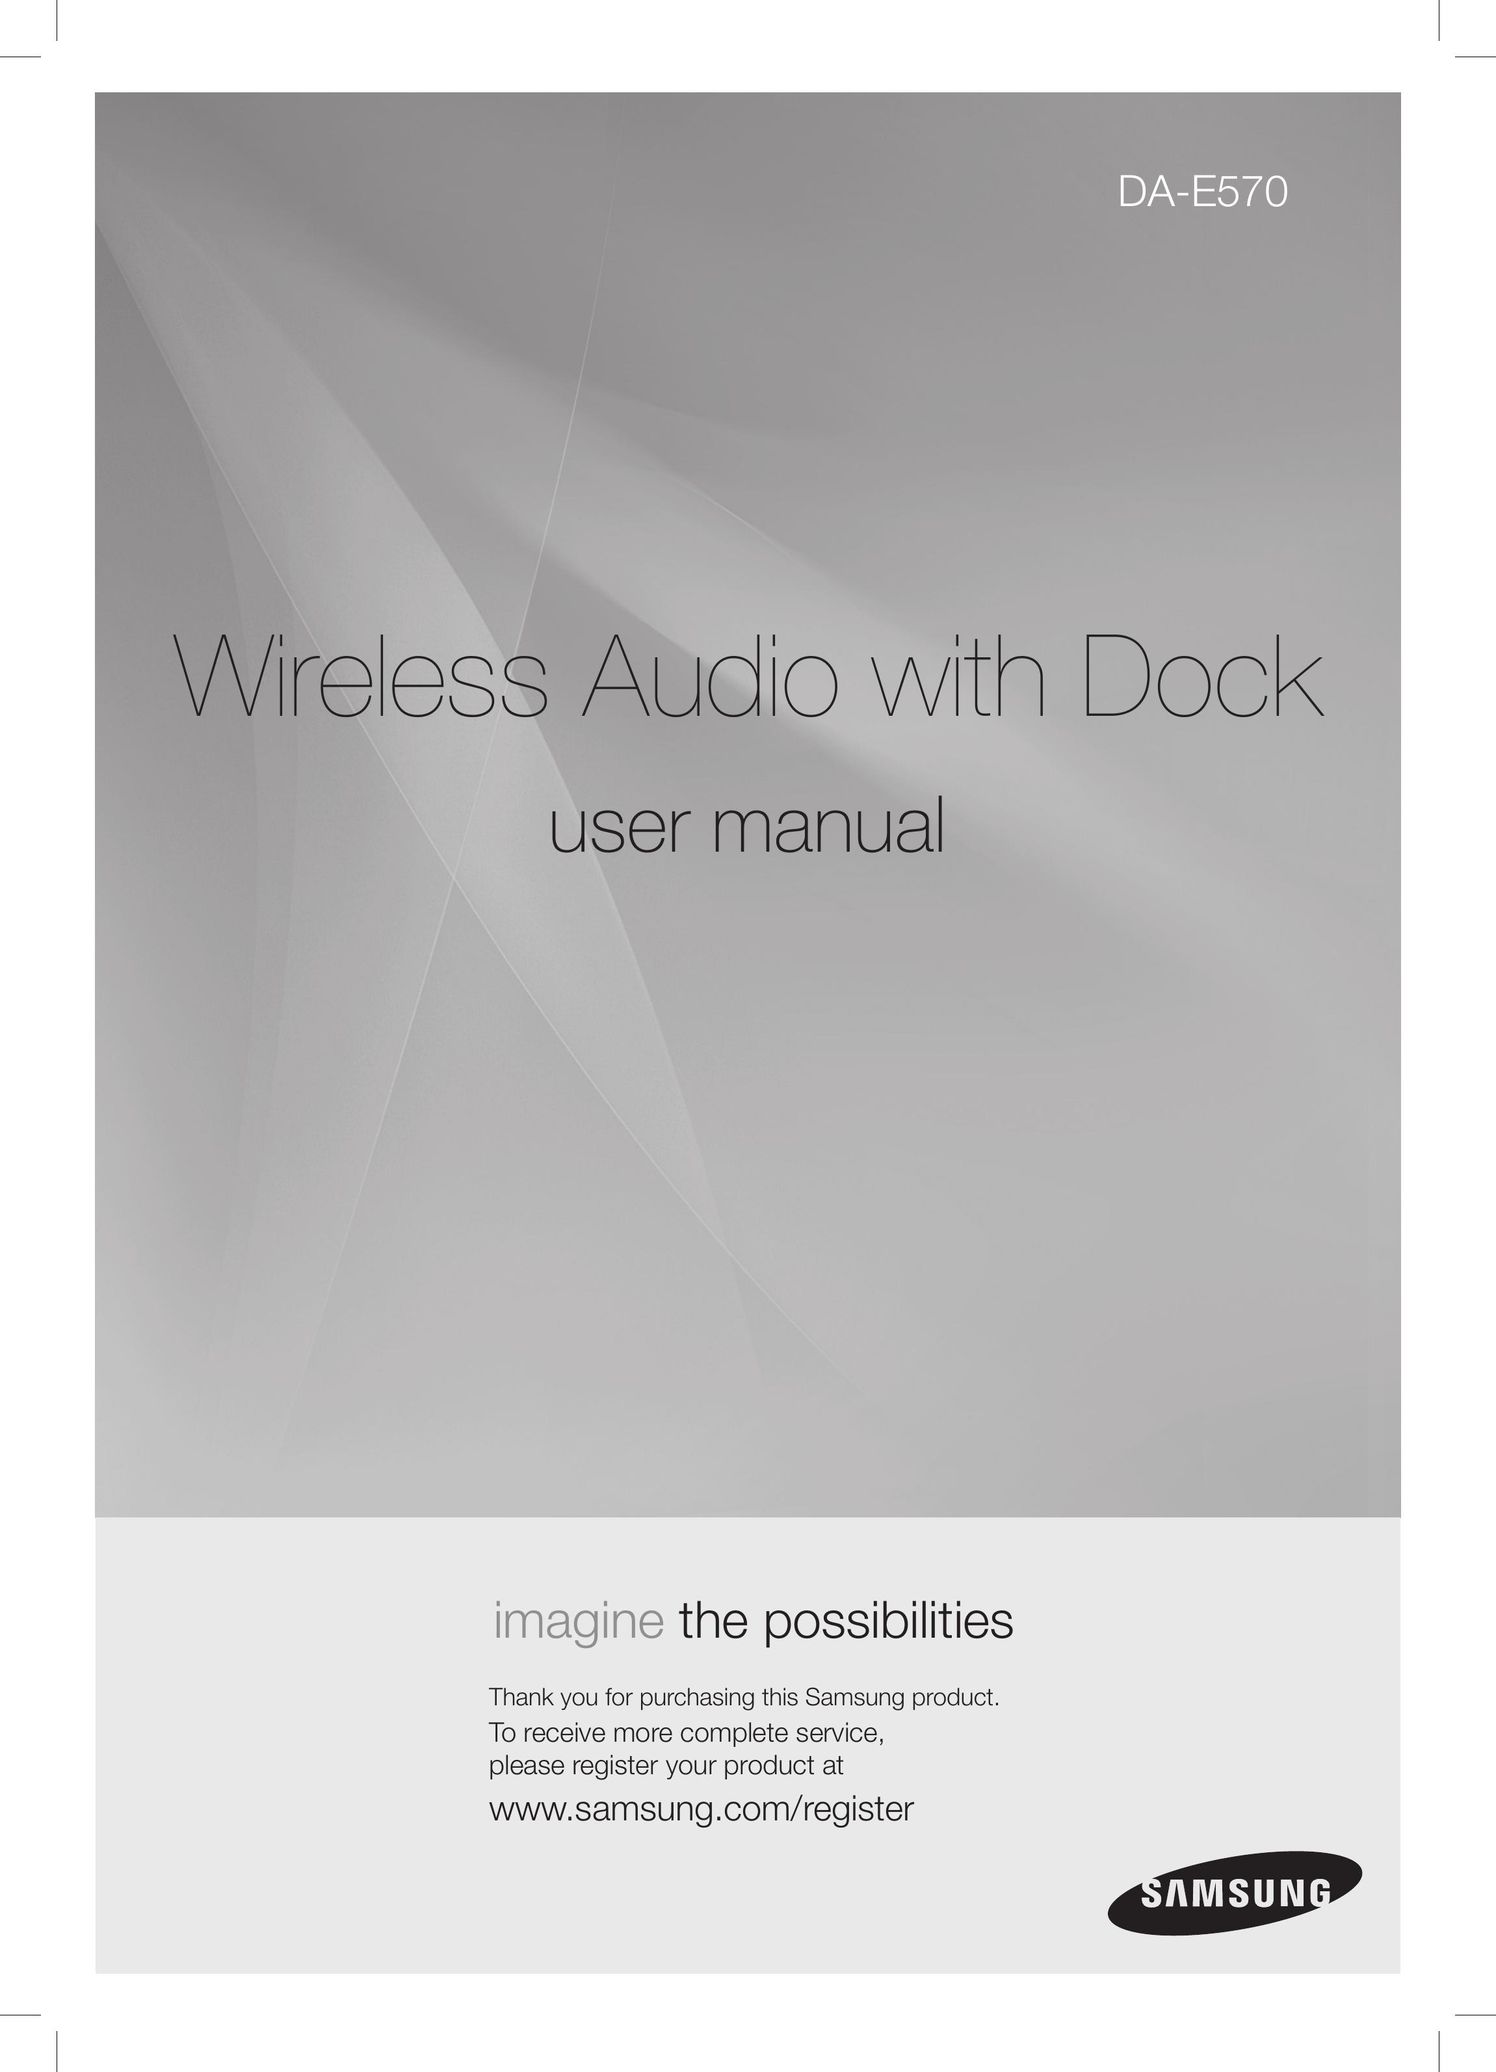 Samsung DA-E570 Speaker System User Manual